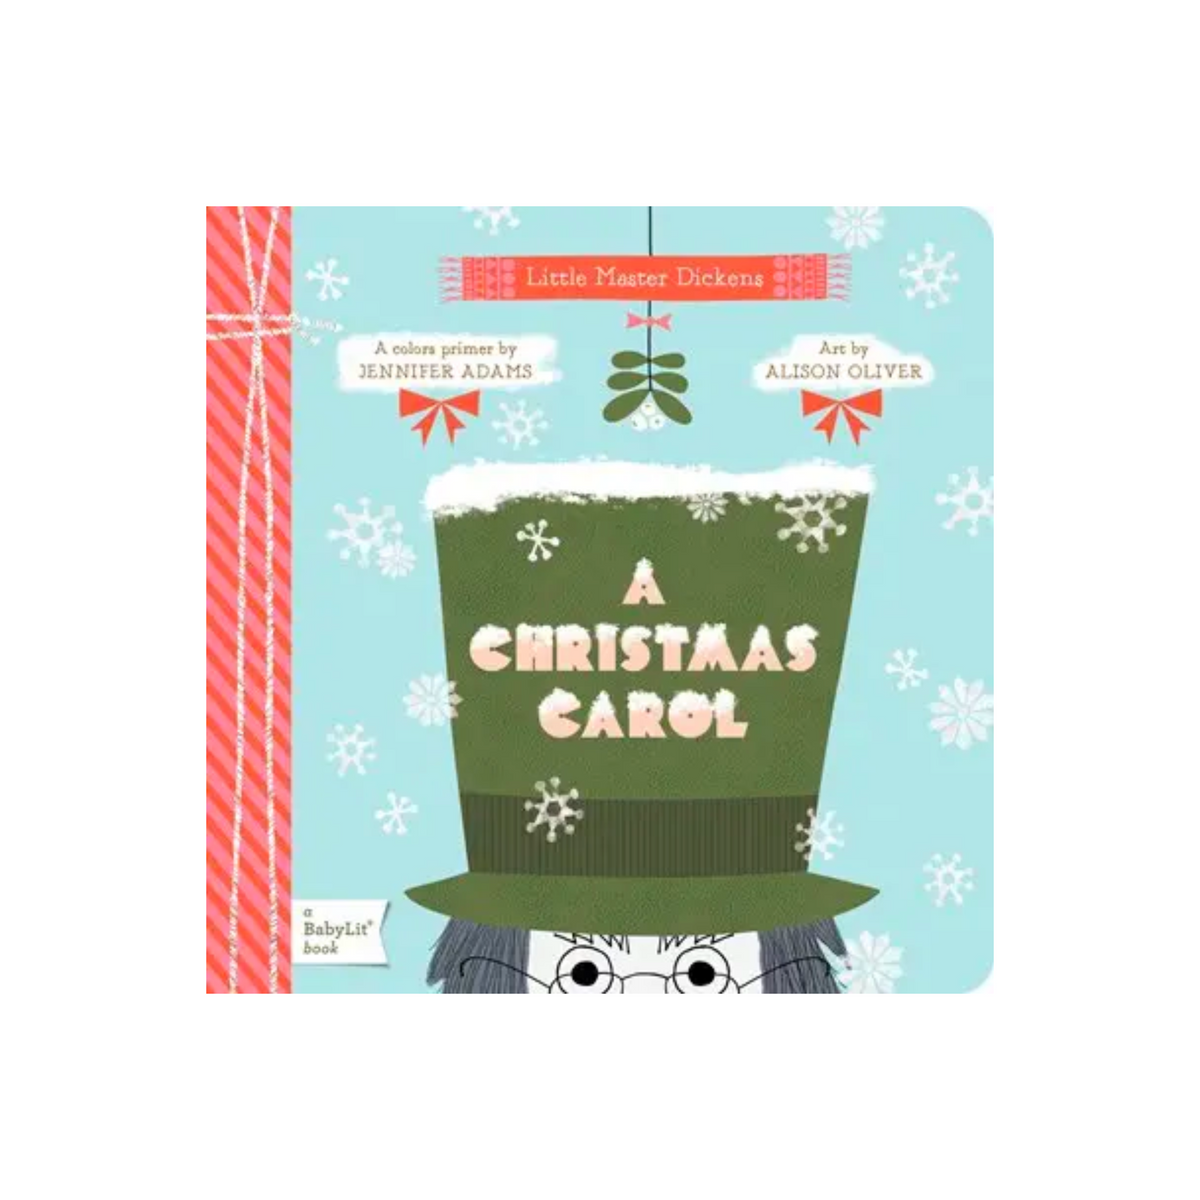 A Christmas Carol: A Babylit Colors Primer Book